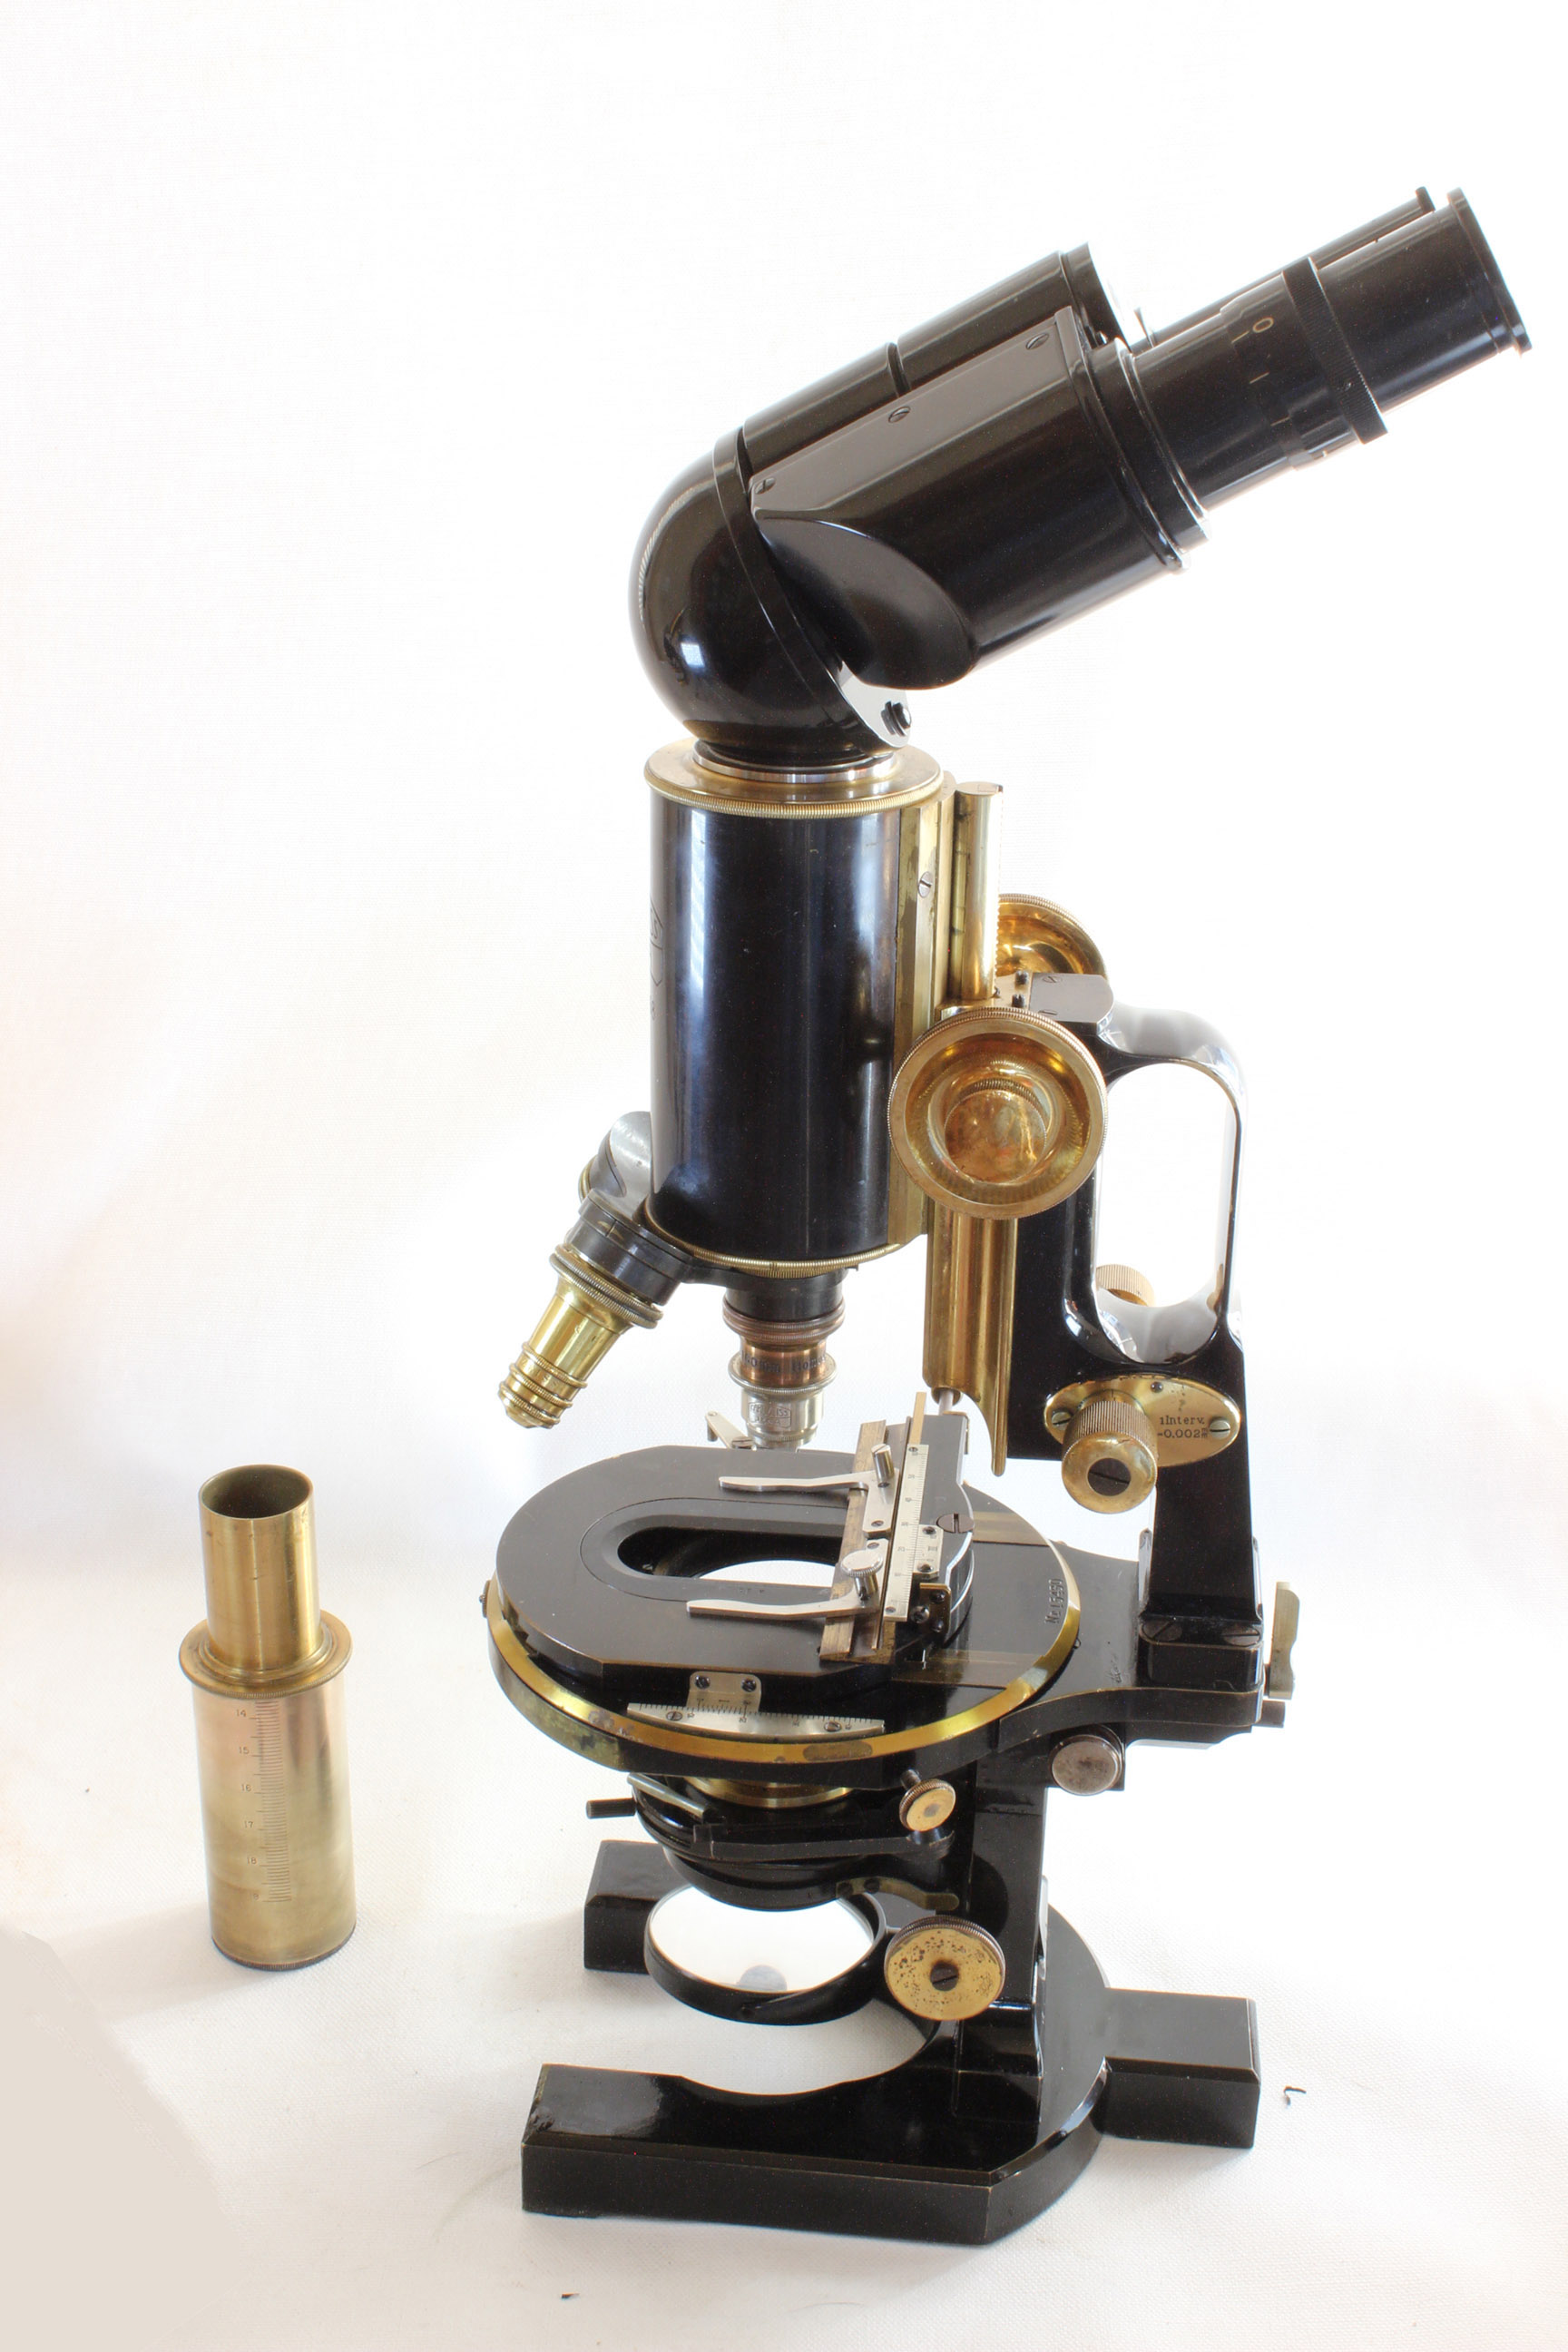 Carl Zeiss 1b withlater Bitumni 
binocular